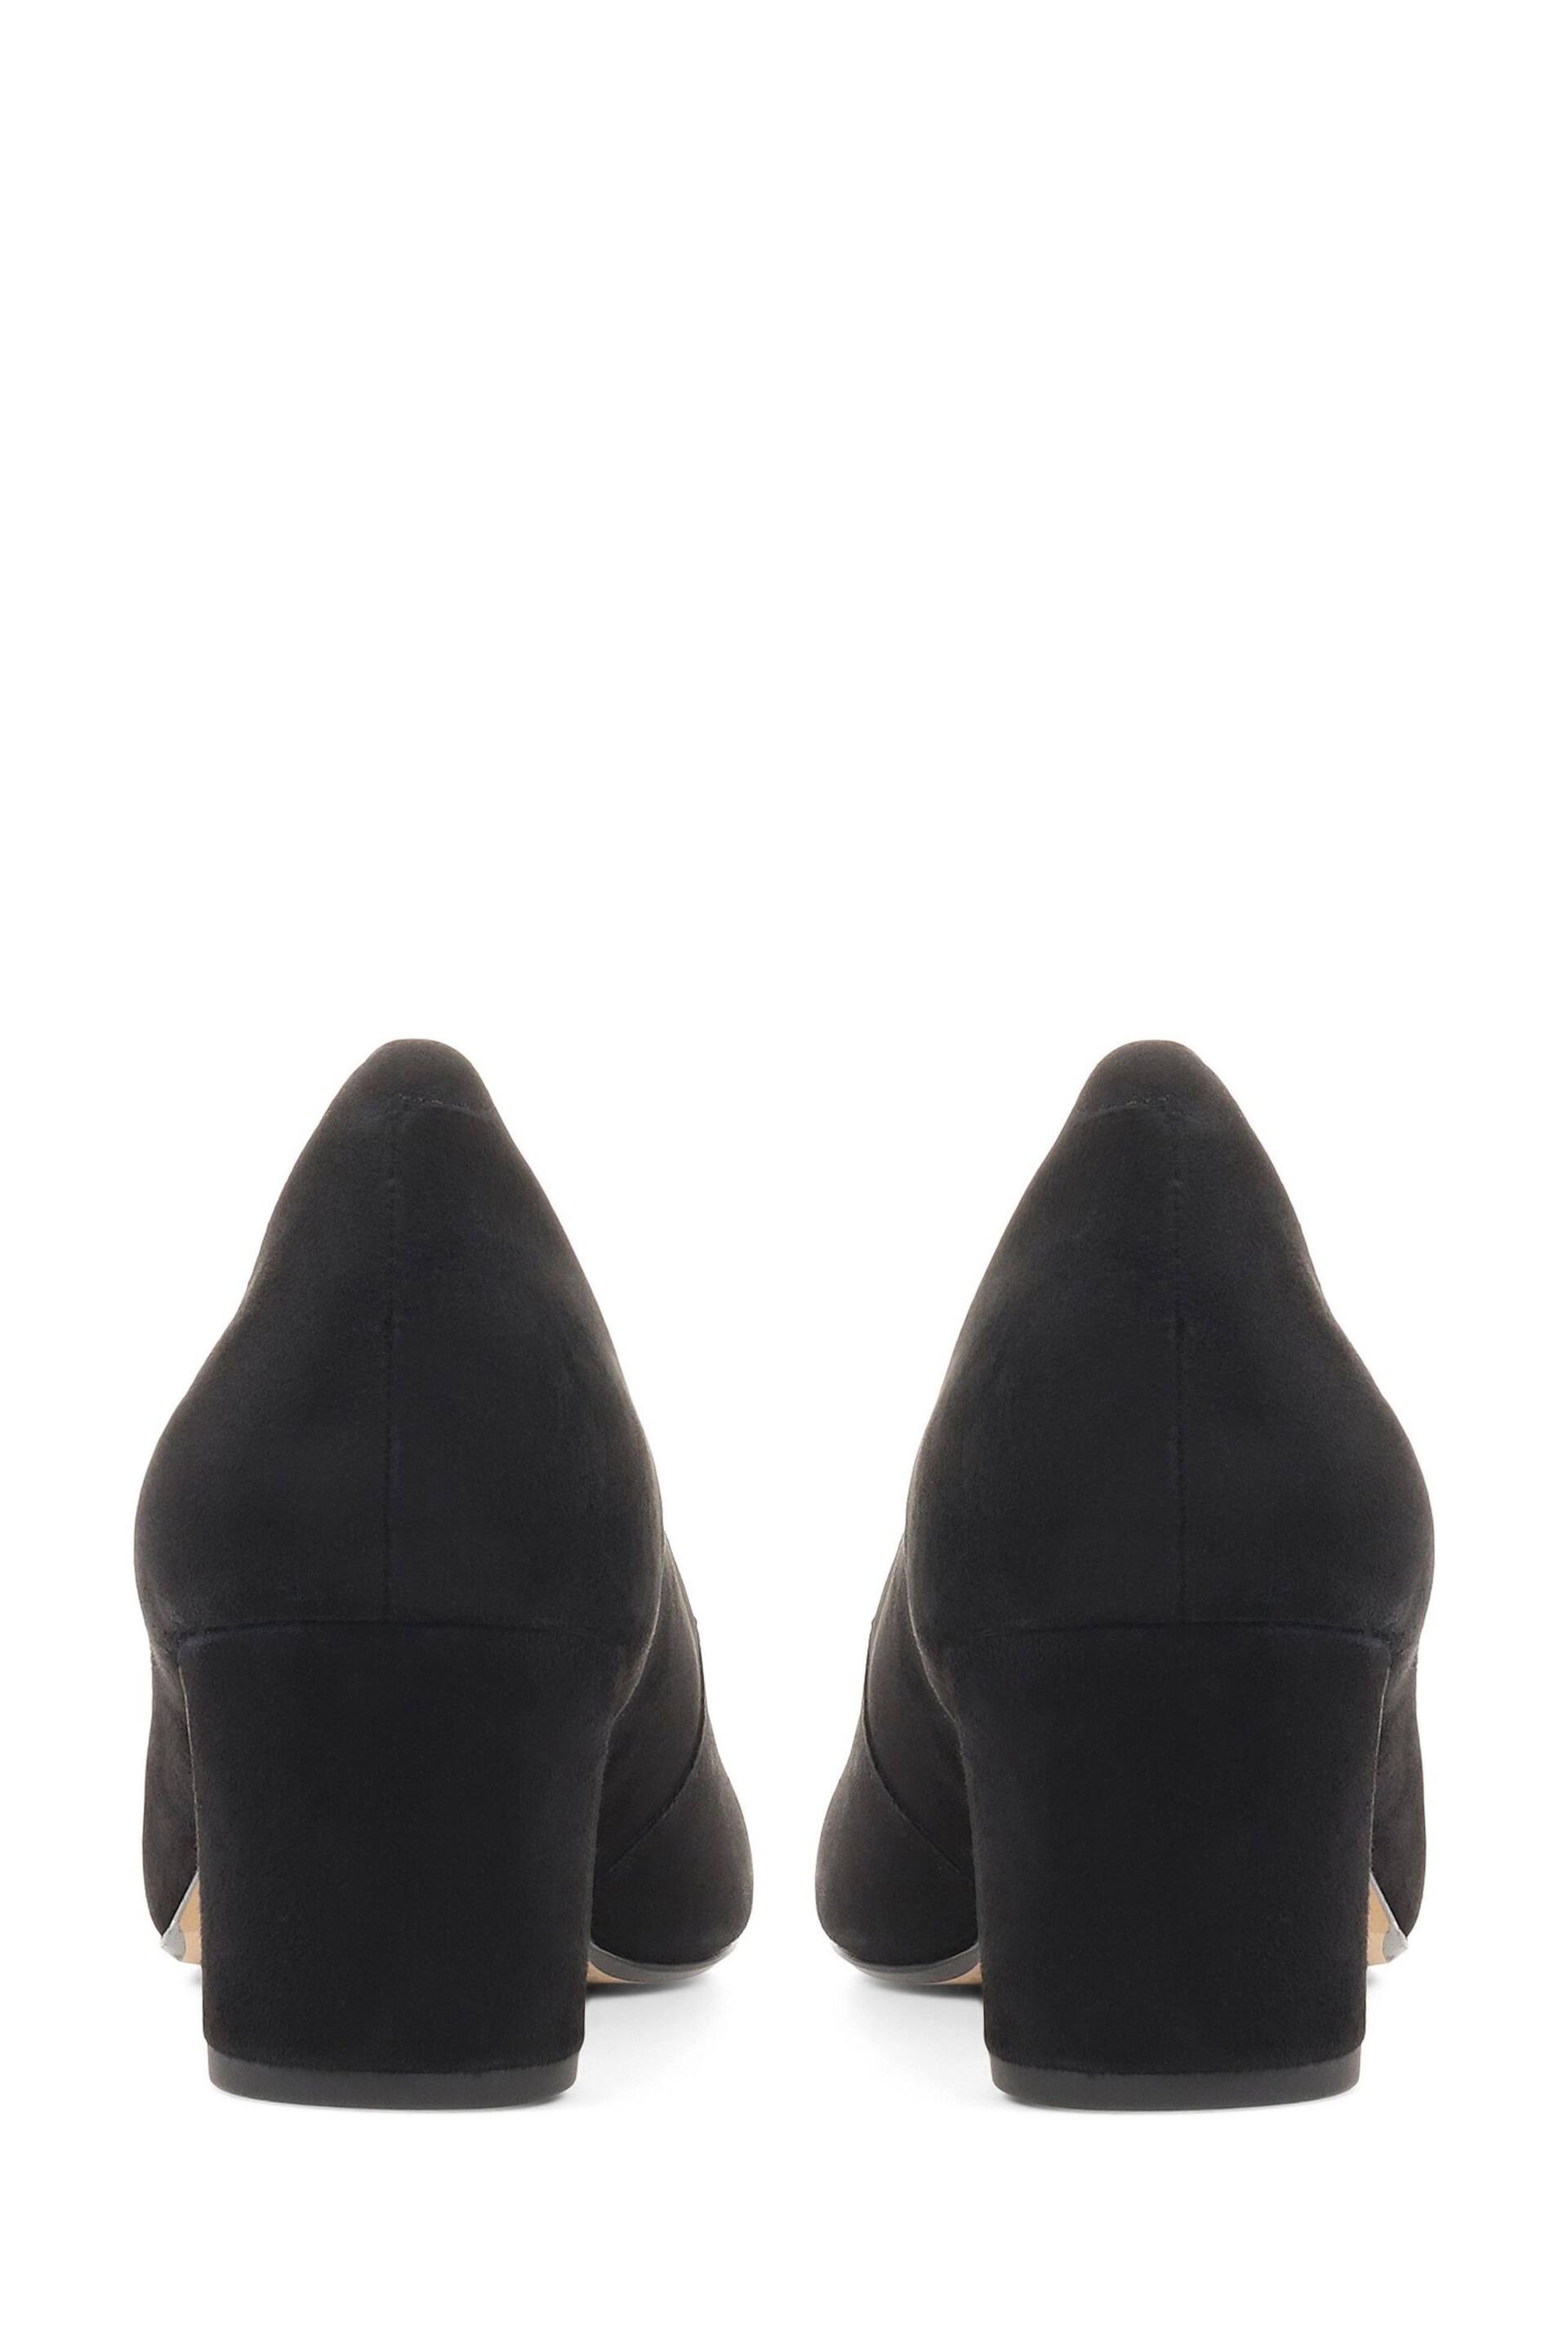 Jones Bootmaker Zoey Leather Court Black Shoes - Image 4 of 6